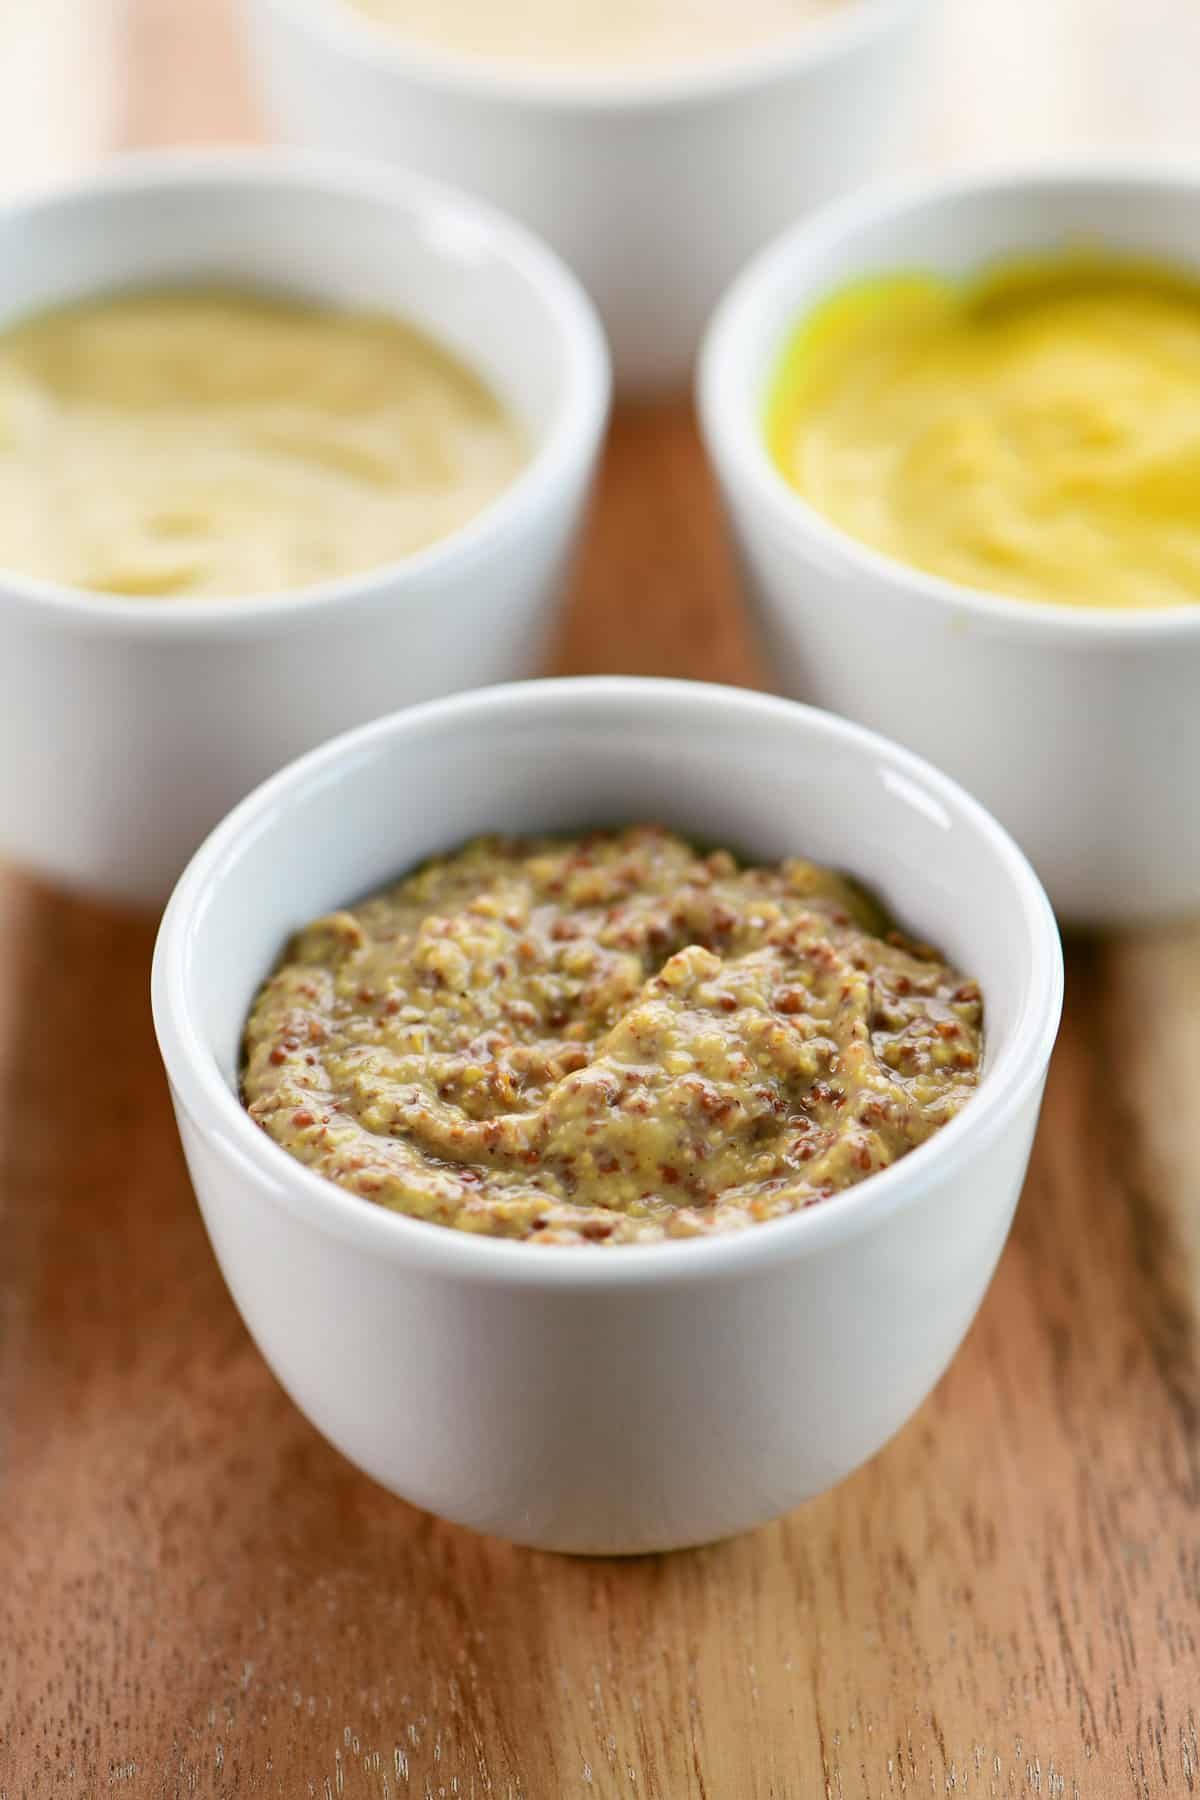 Stone ground mustard in a small white condiment bowl.